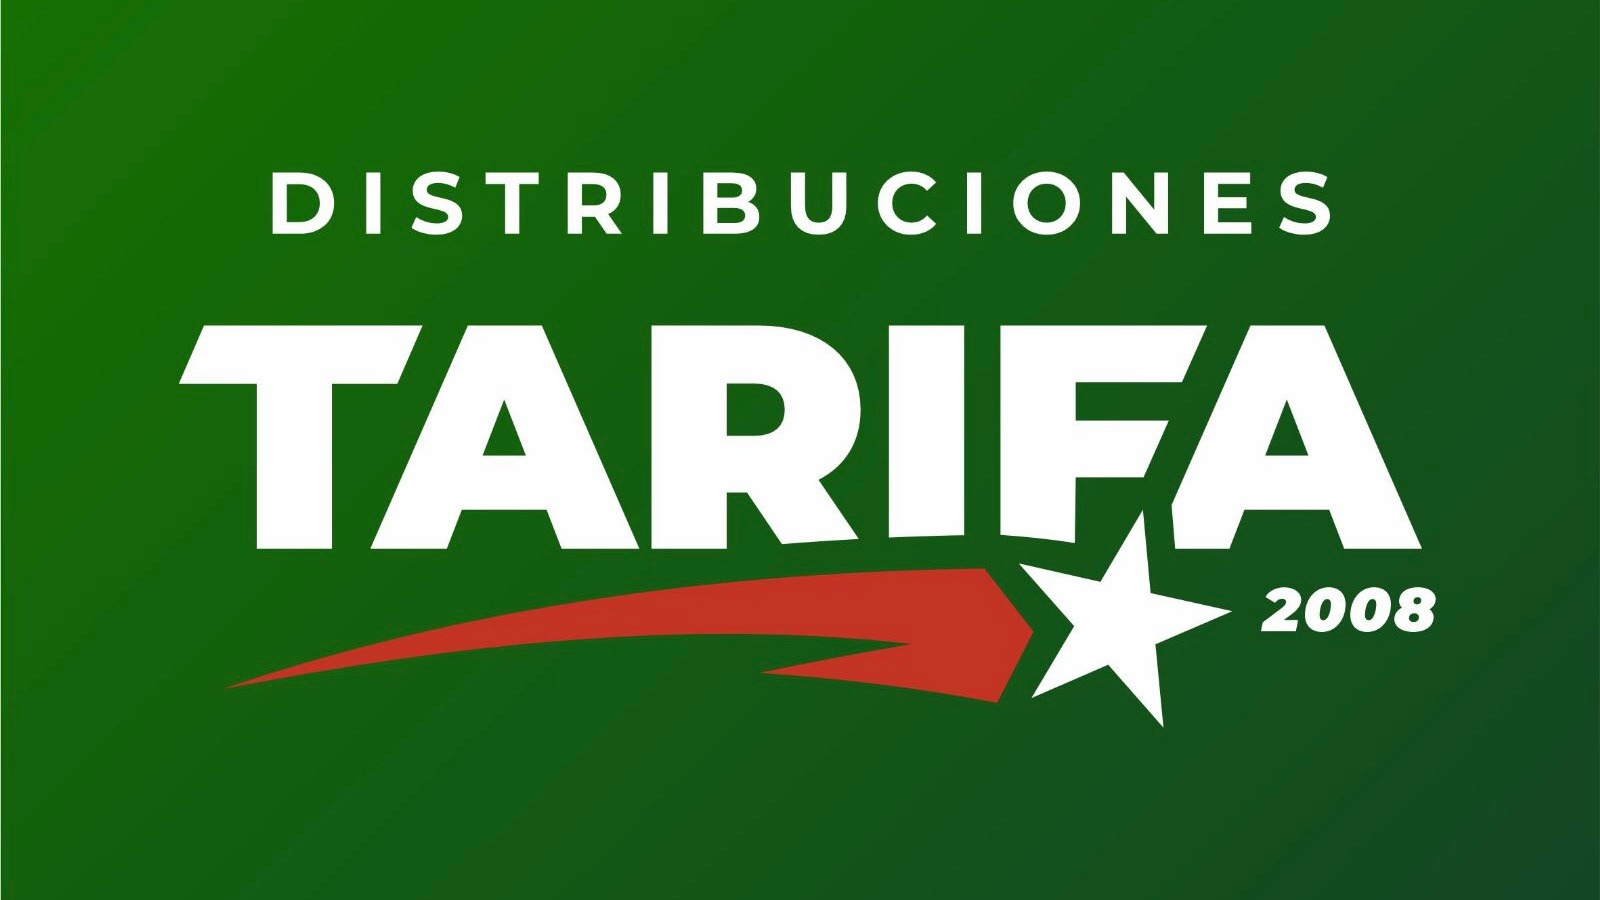 Distribuciones Tarifa 2008